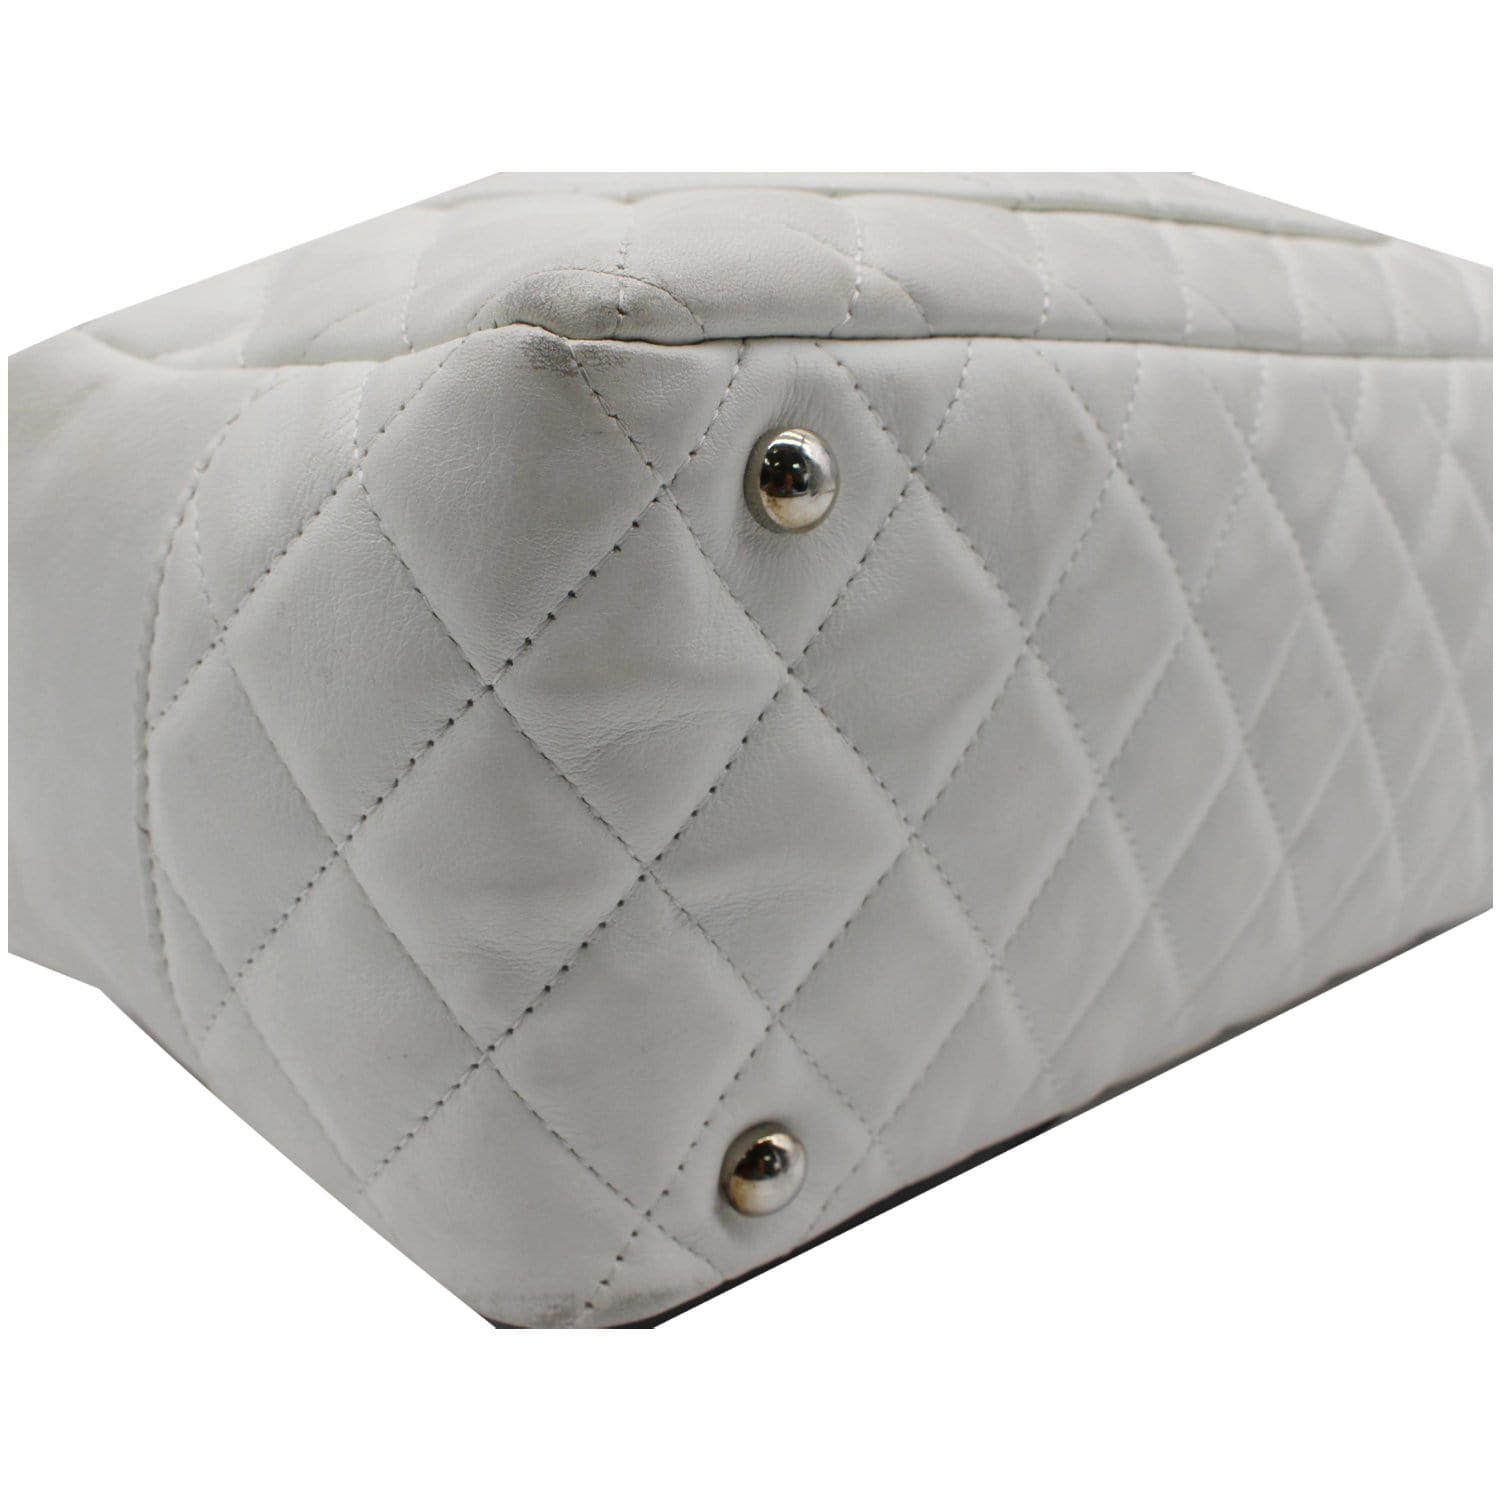 CHANEL Shoulder Bag A25171 Bowling bag Cambon line lambskin white whit –